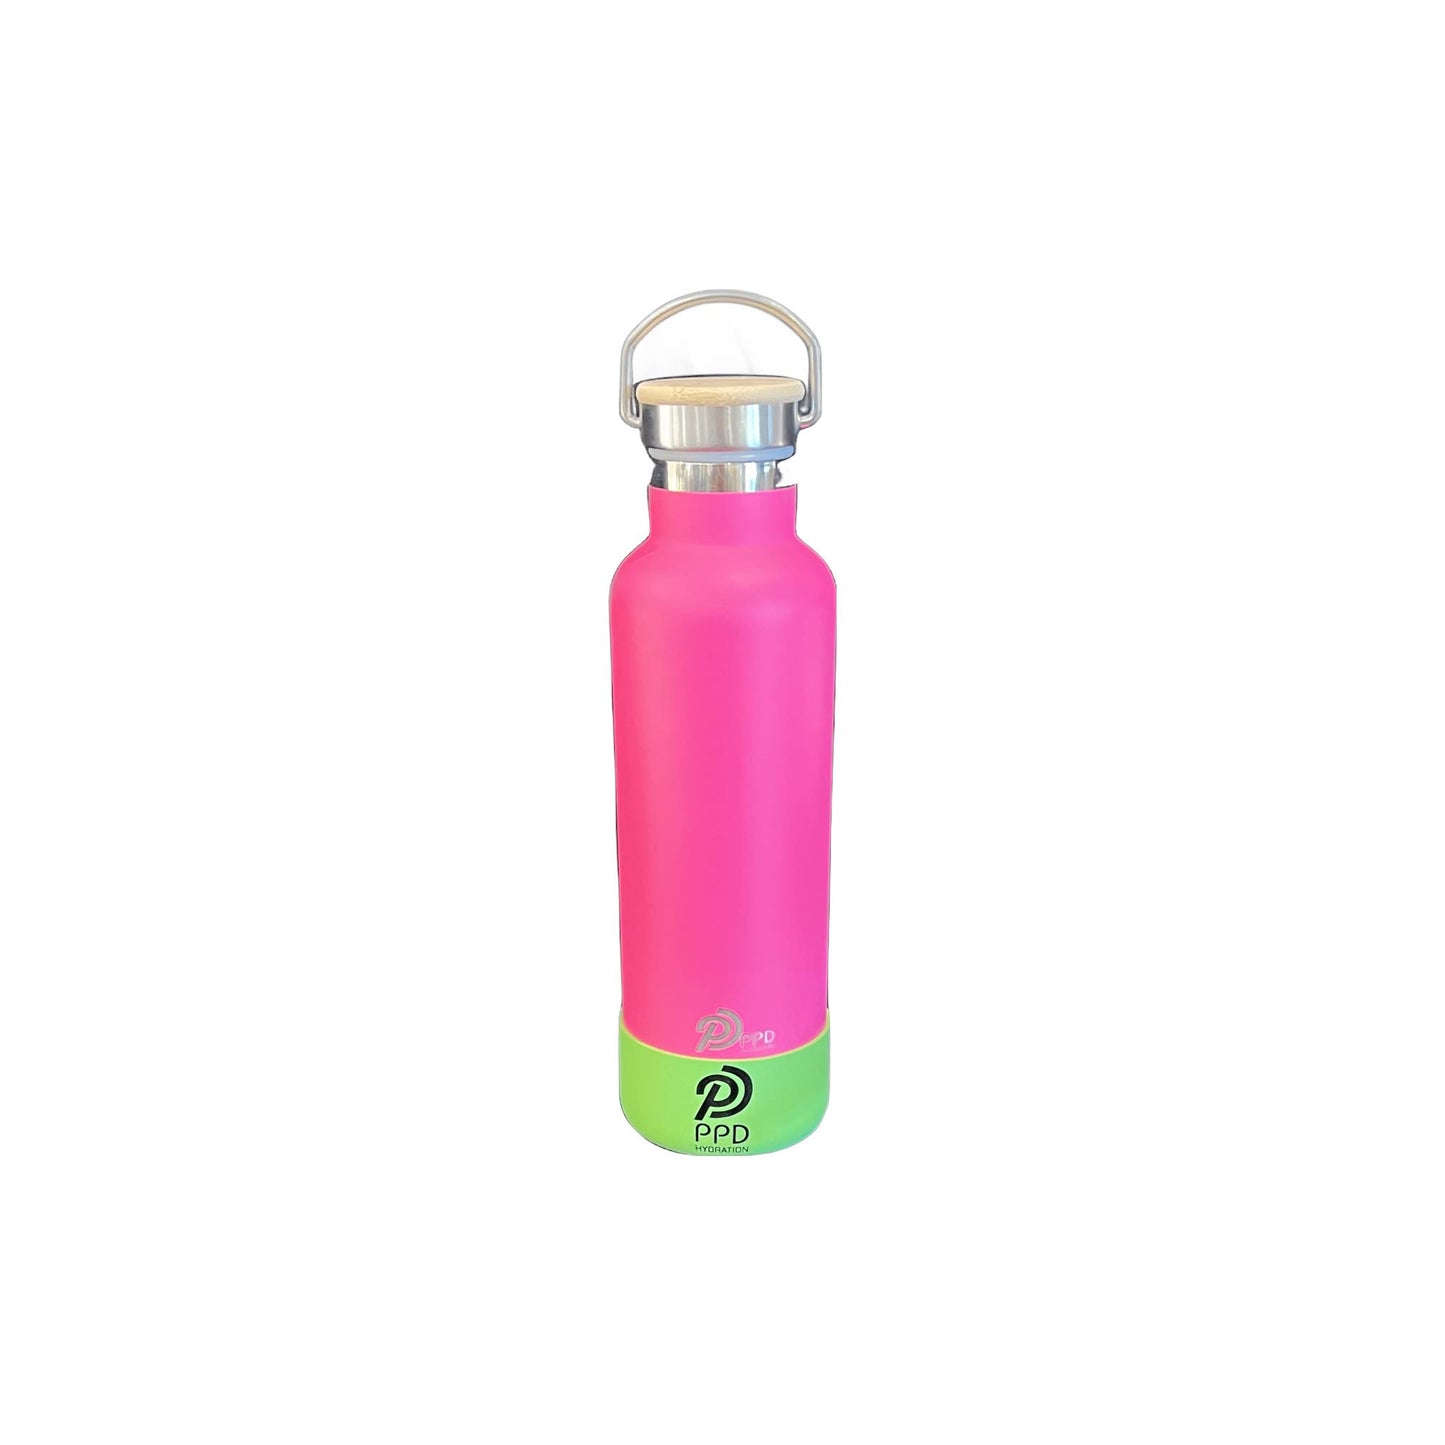 750ml Water Bottle - Hot Pink